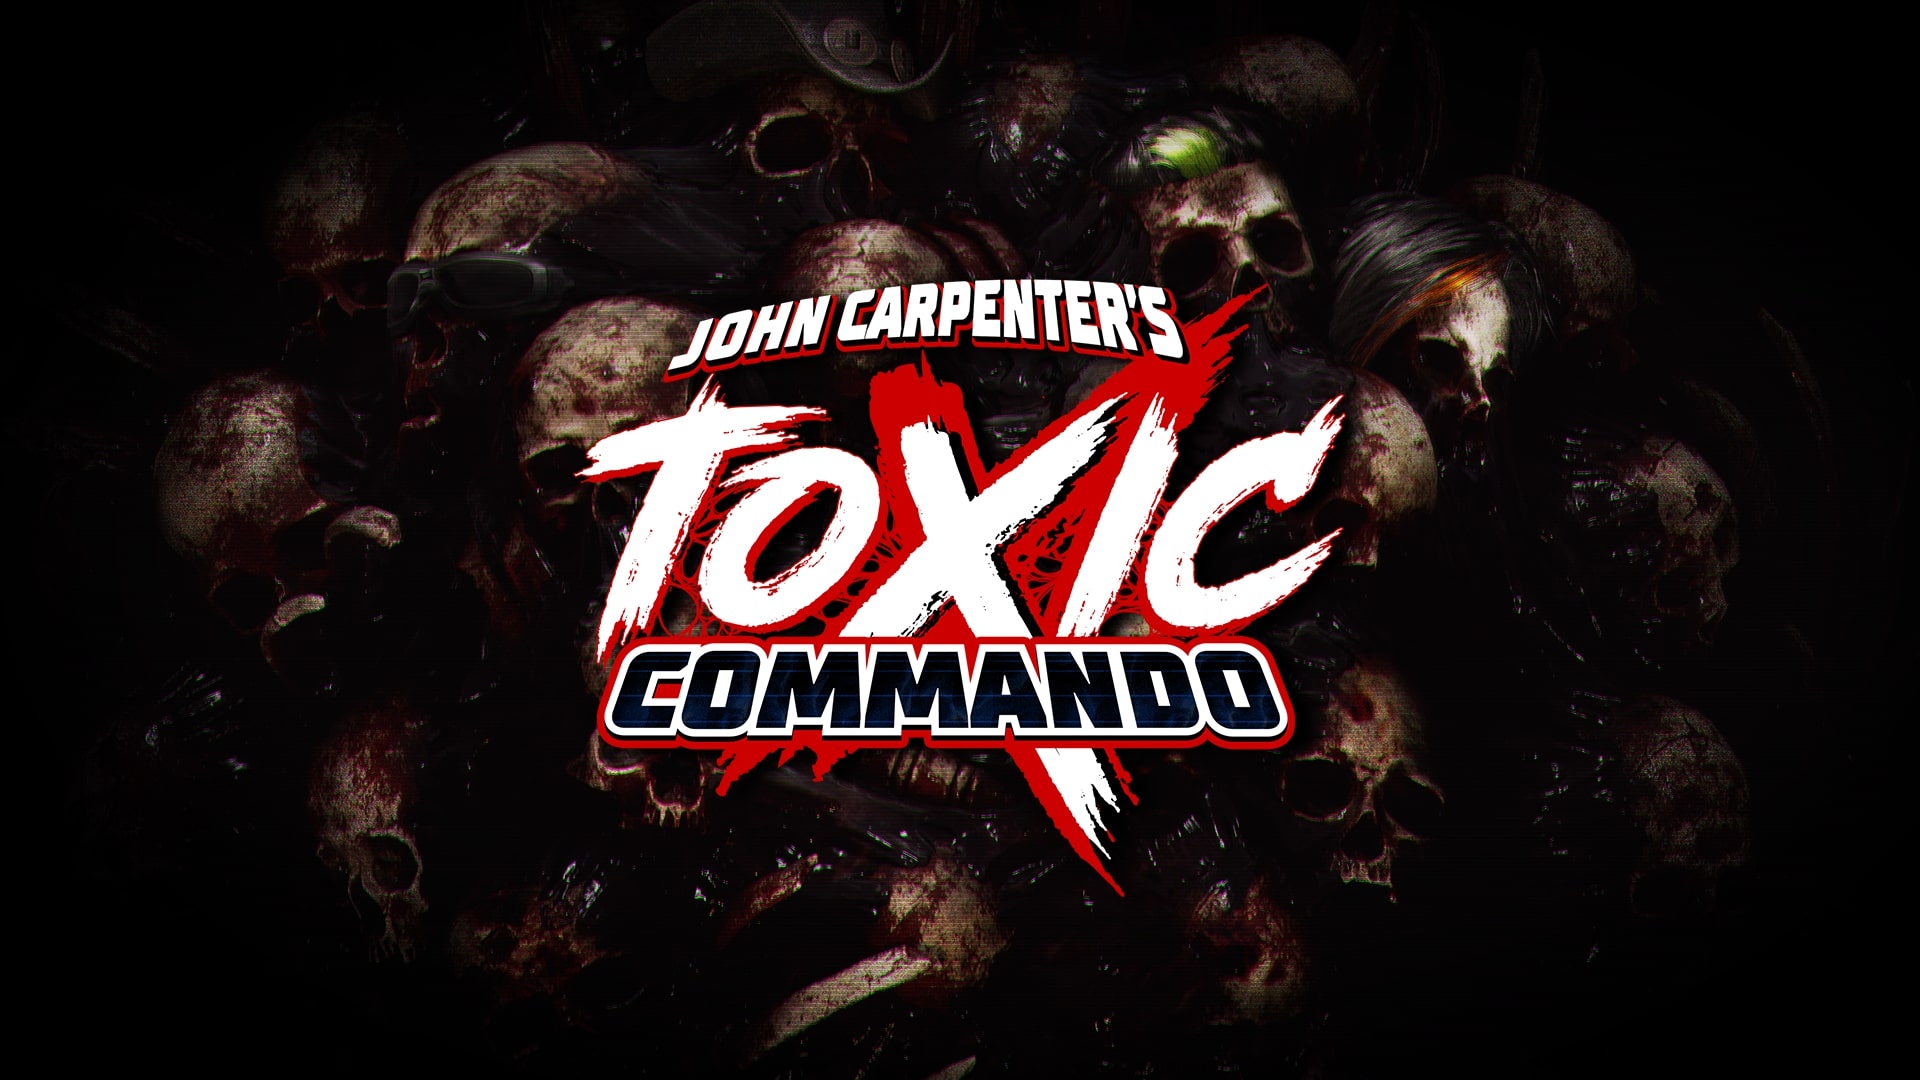 John carpenters toxic commando key art 15